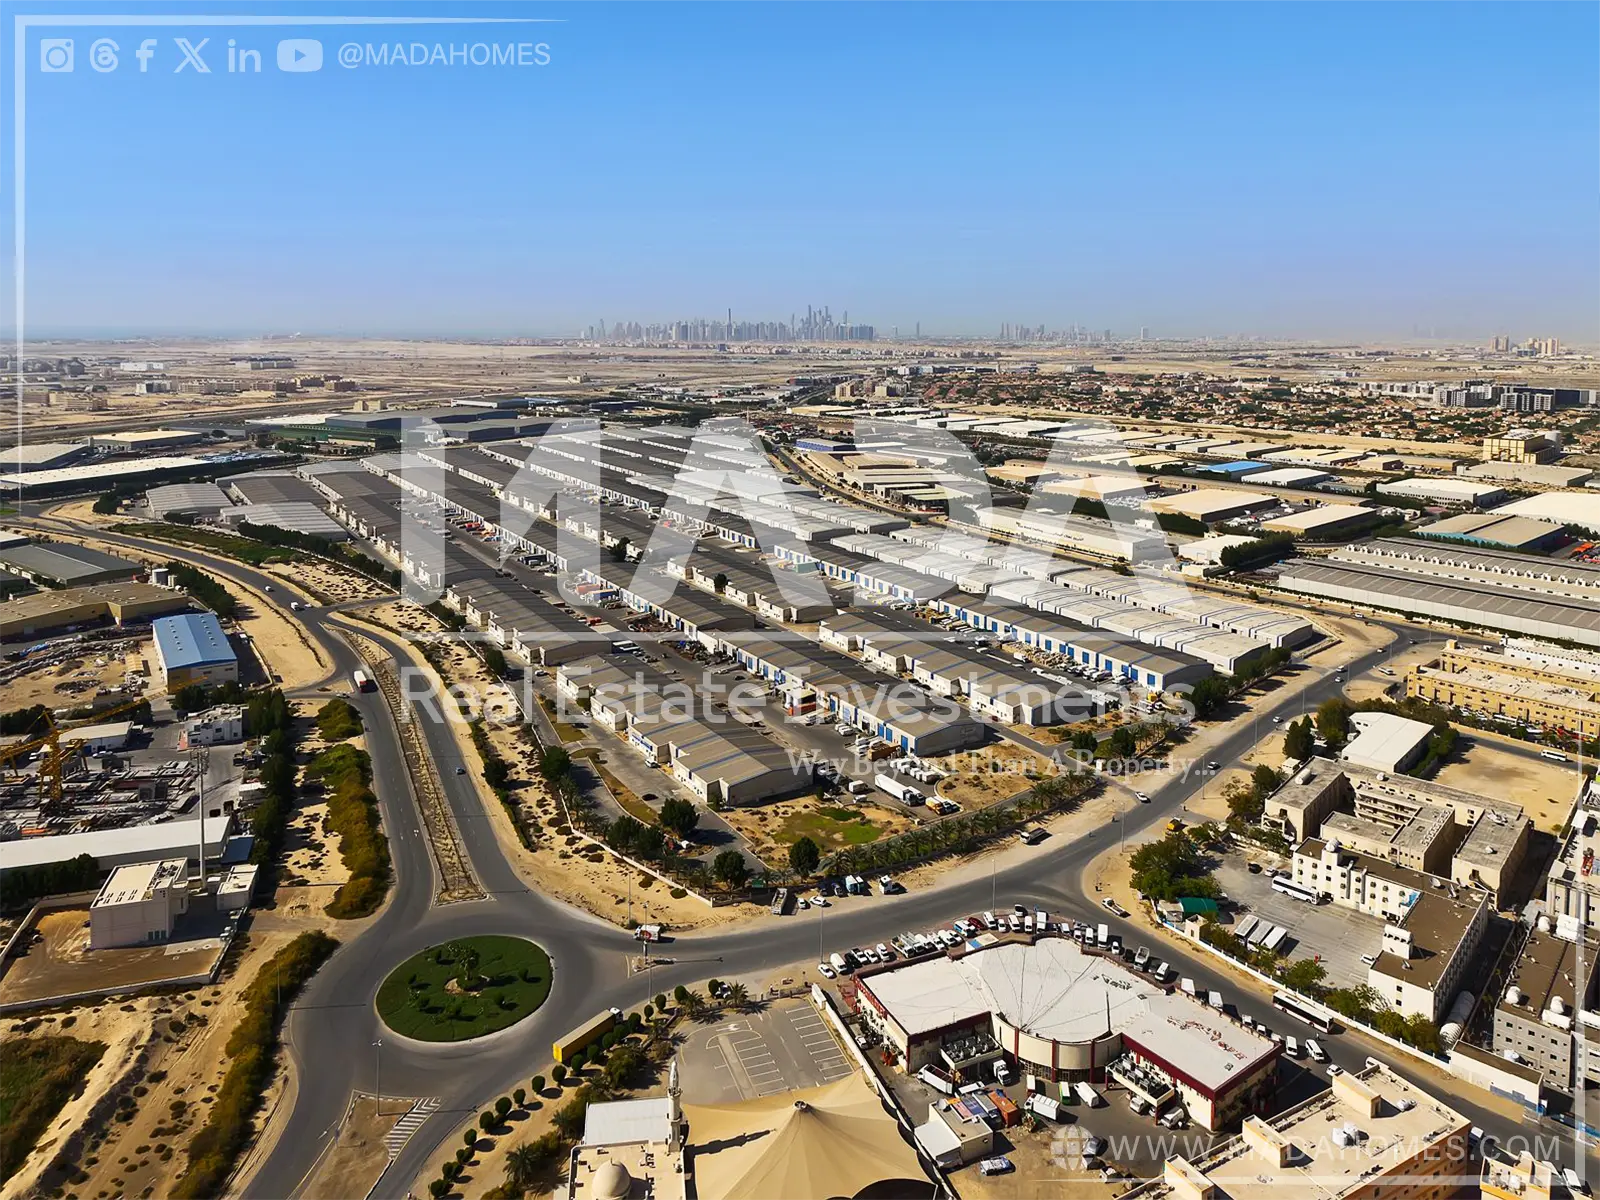 Dubai Investment Park website